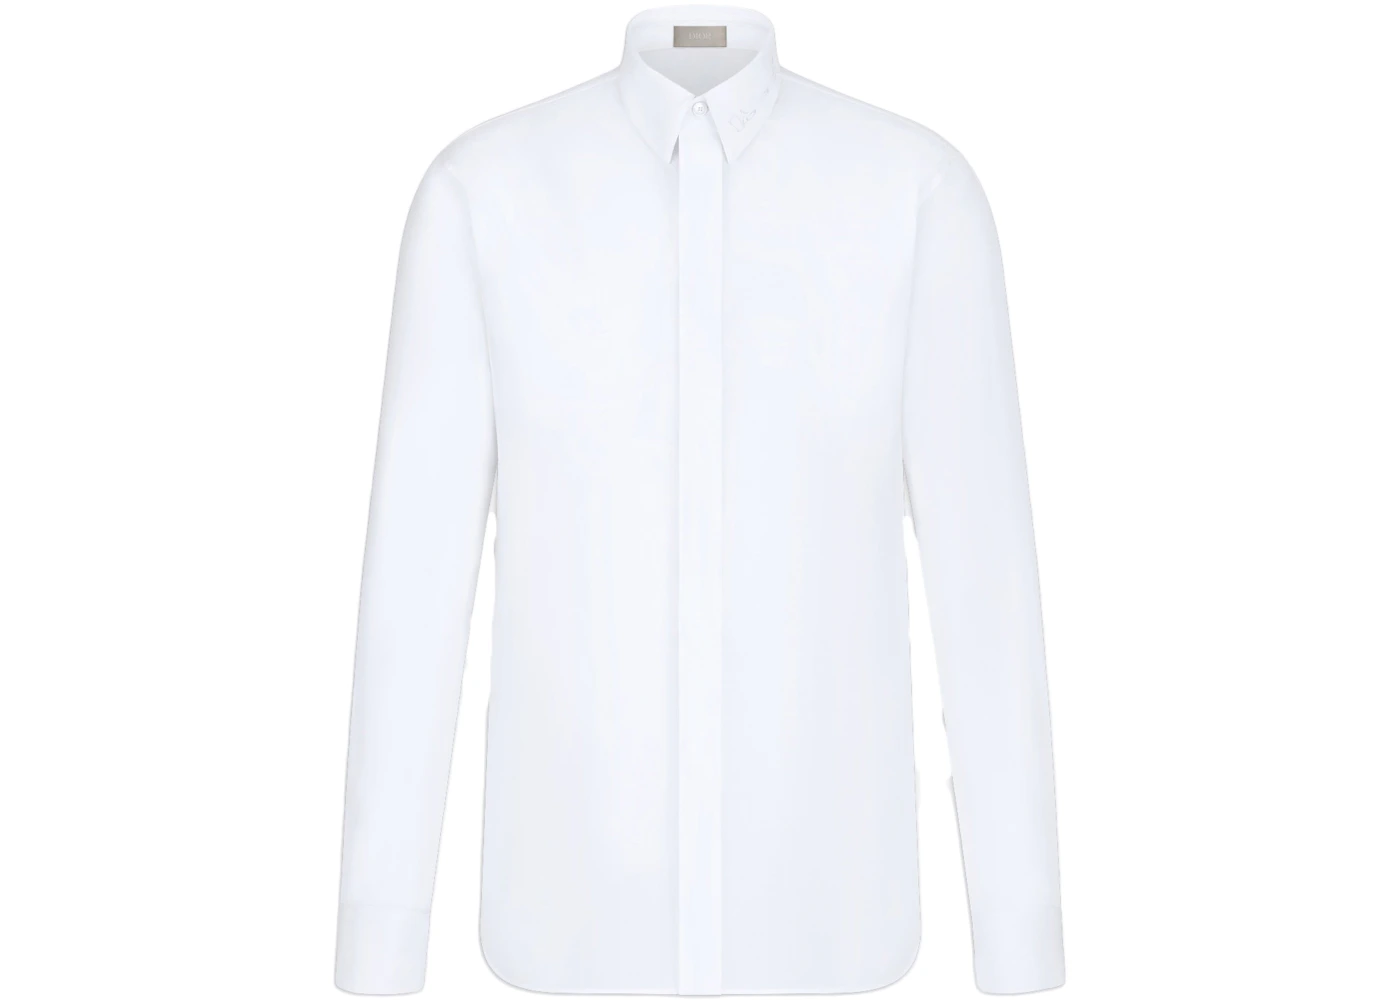 Dior x CACTUS JACK Shirt White Men's - SS22 - US